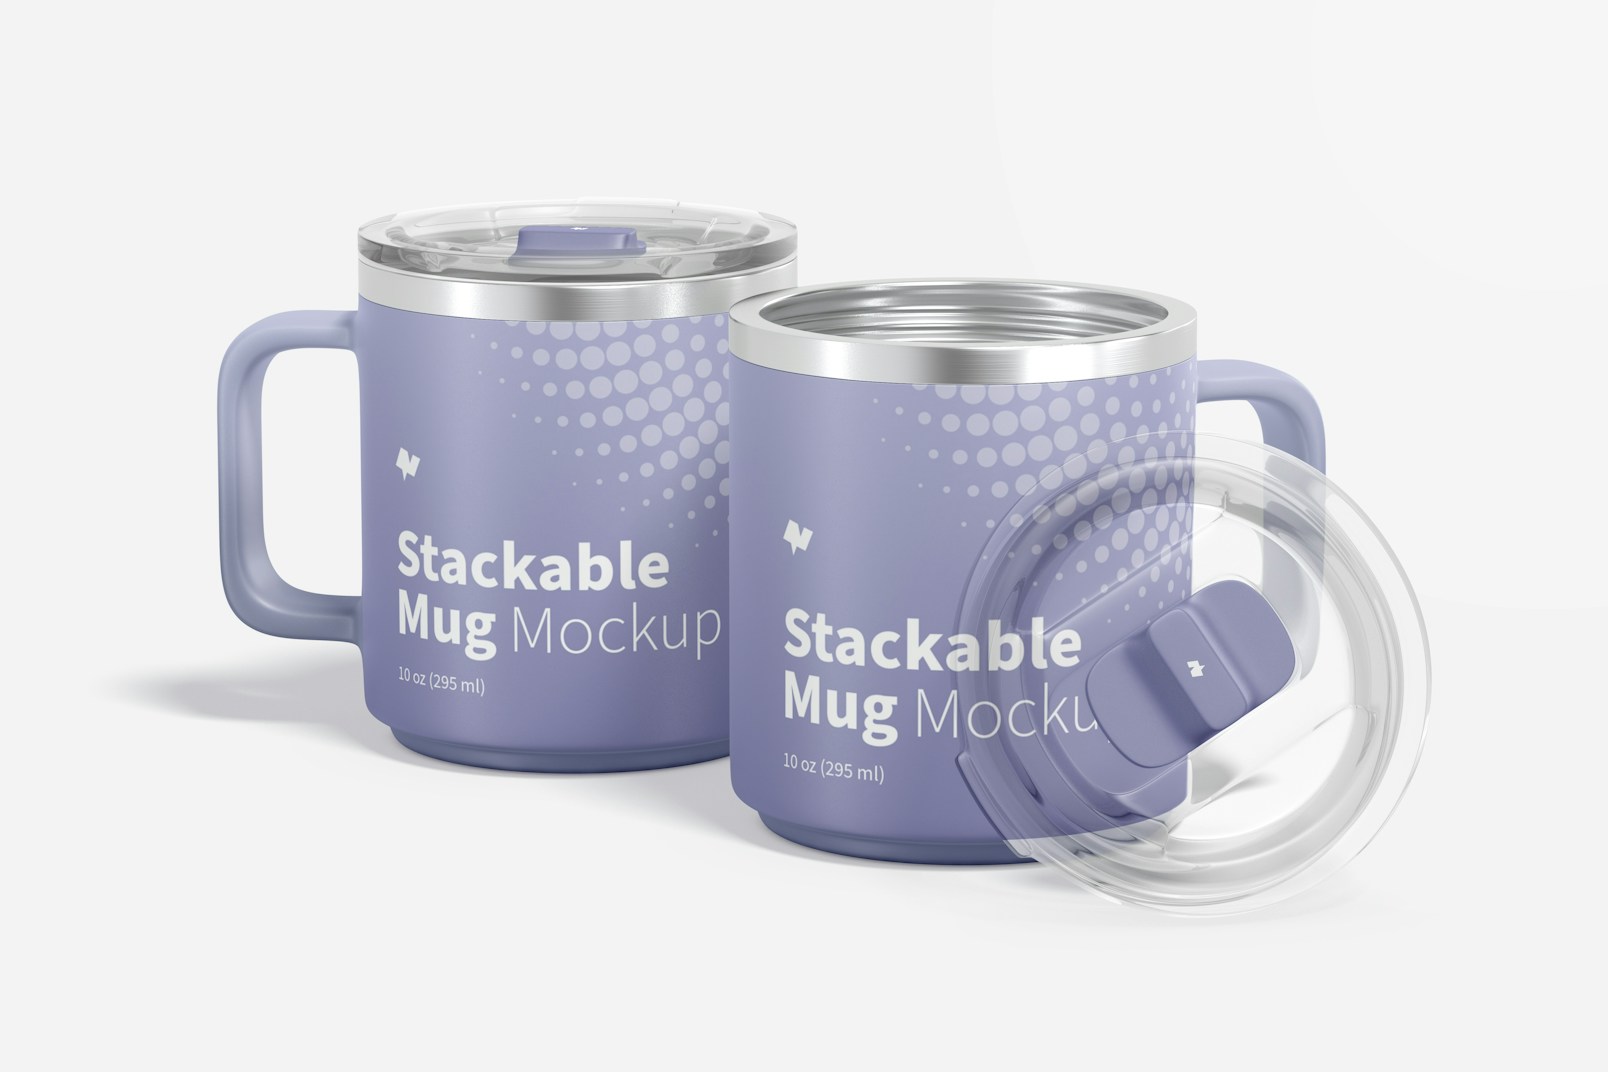 10 oz Stackable Mugs Mockup